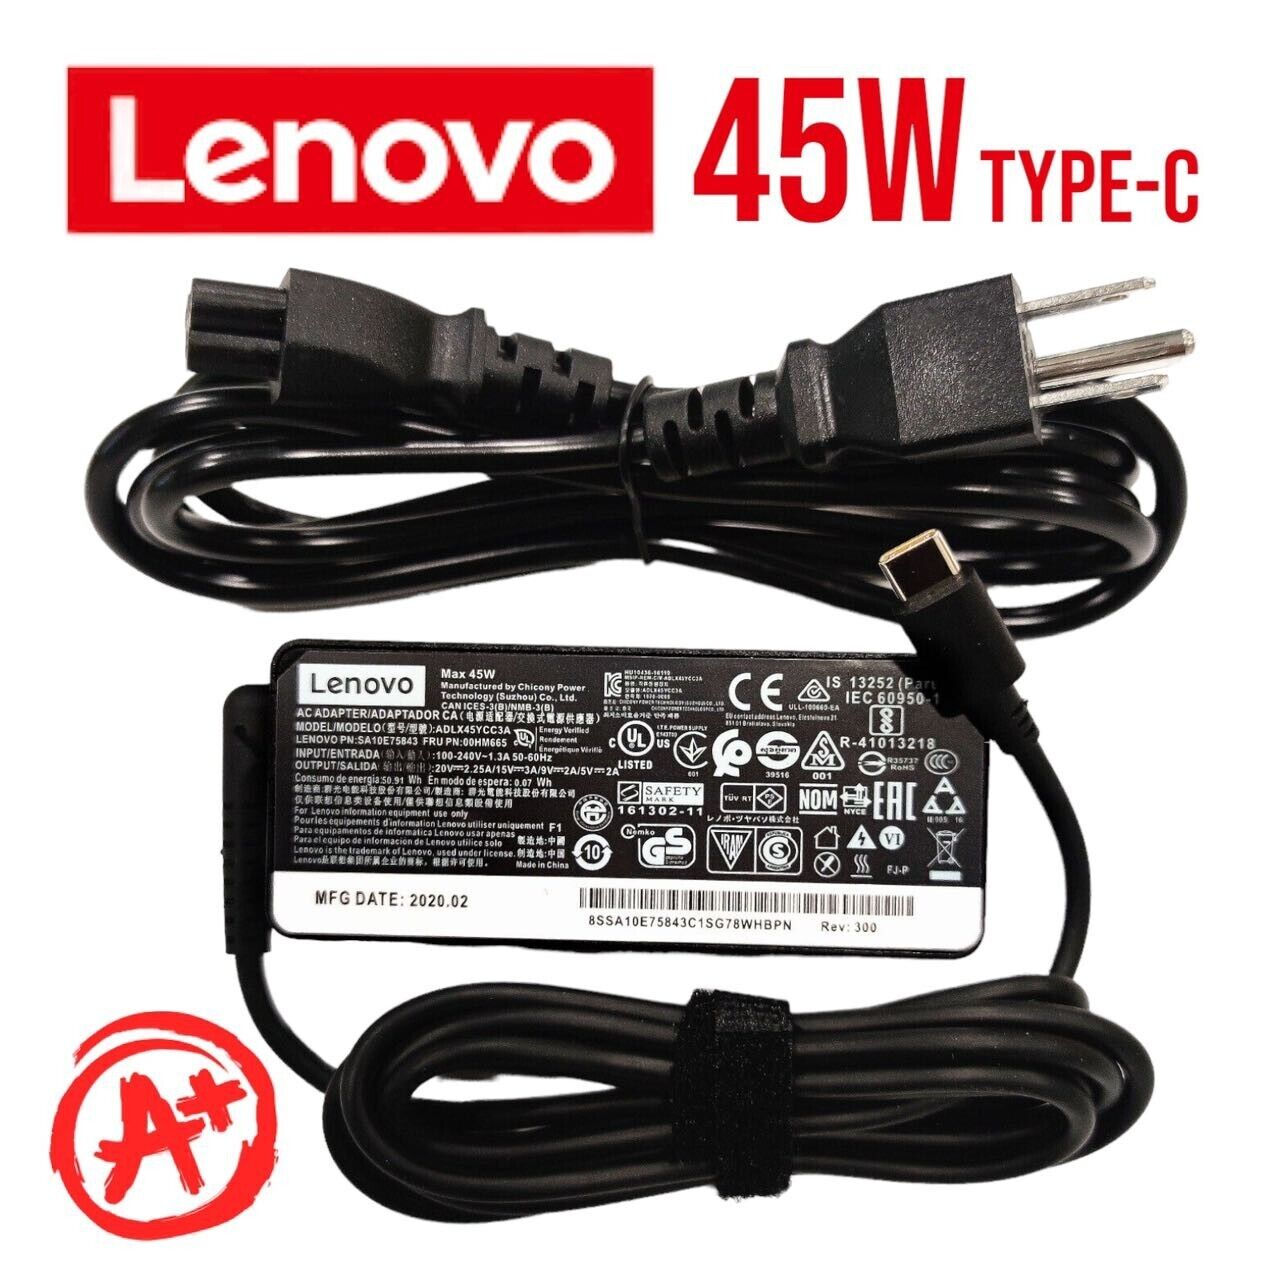 Genuine 45W Lenovo USB-C TYPE-C Charger AC Adapter 20V 2.25A Ideapad Yoga Carbon